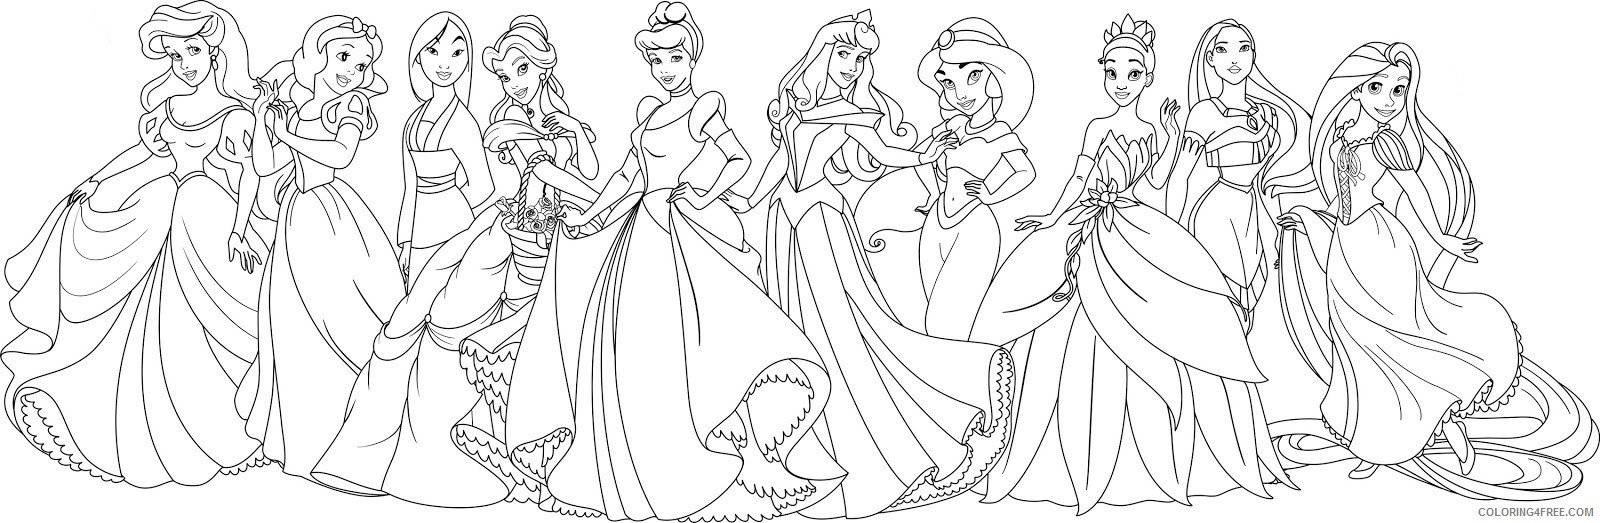 Disney Princess Coloring Pages Cartoons Disney Princess for Adults Printable 2020 2382 Coloring4free